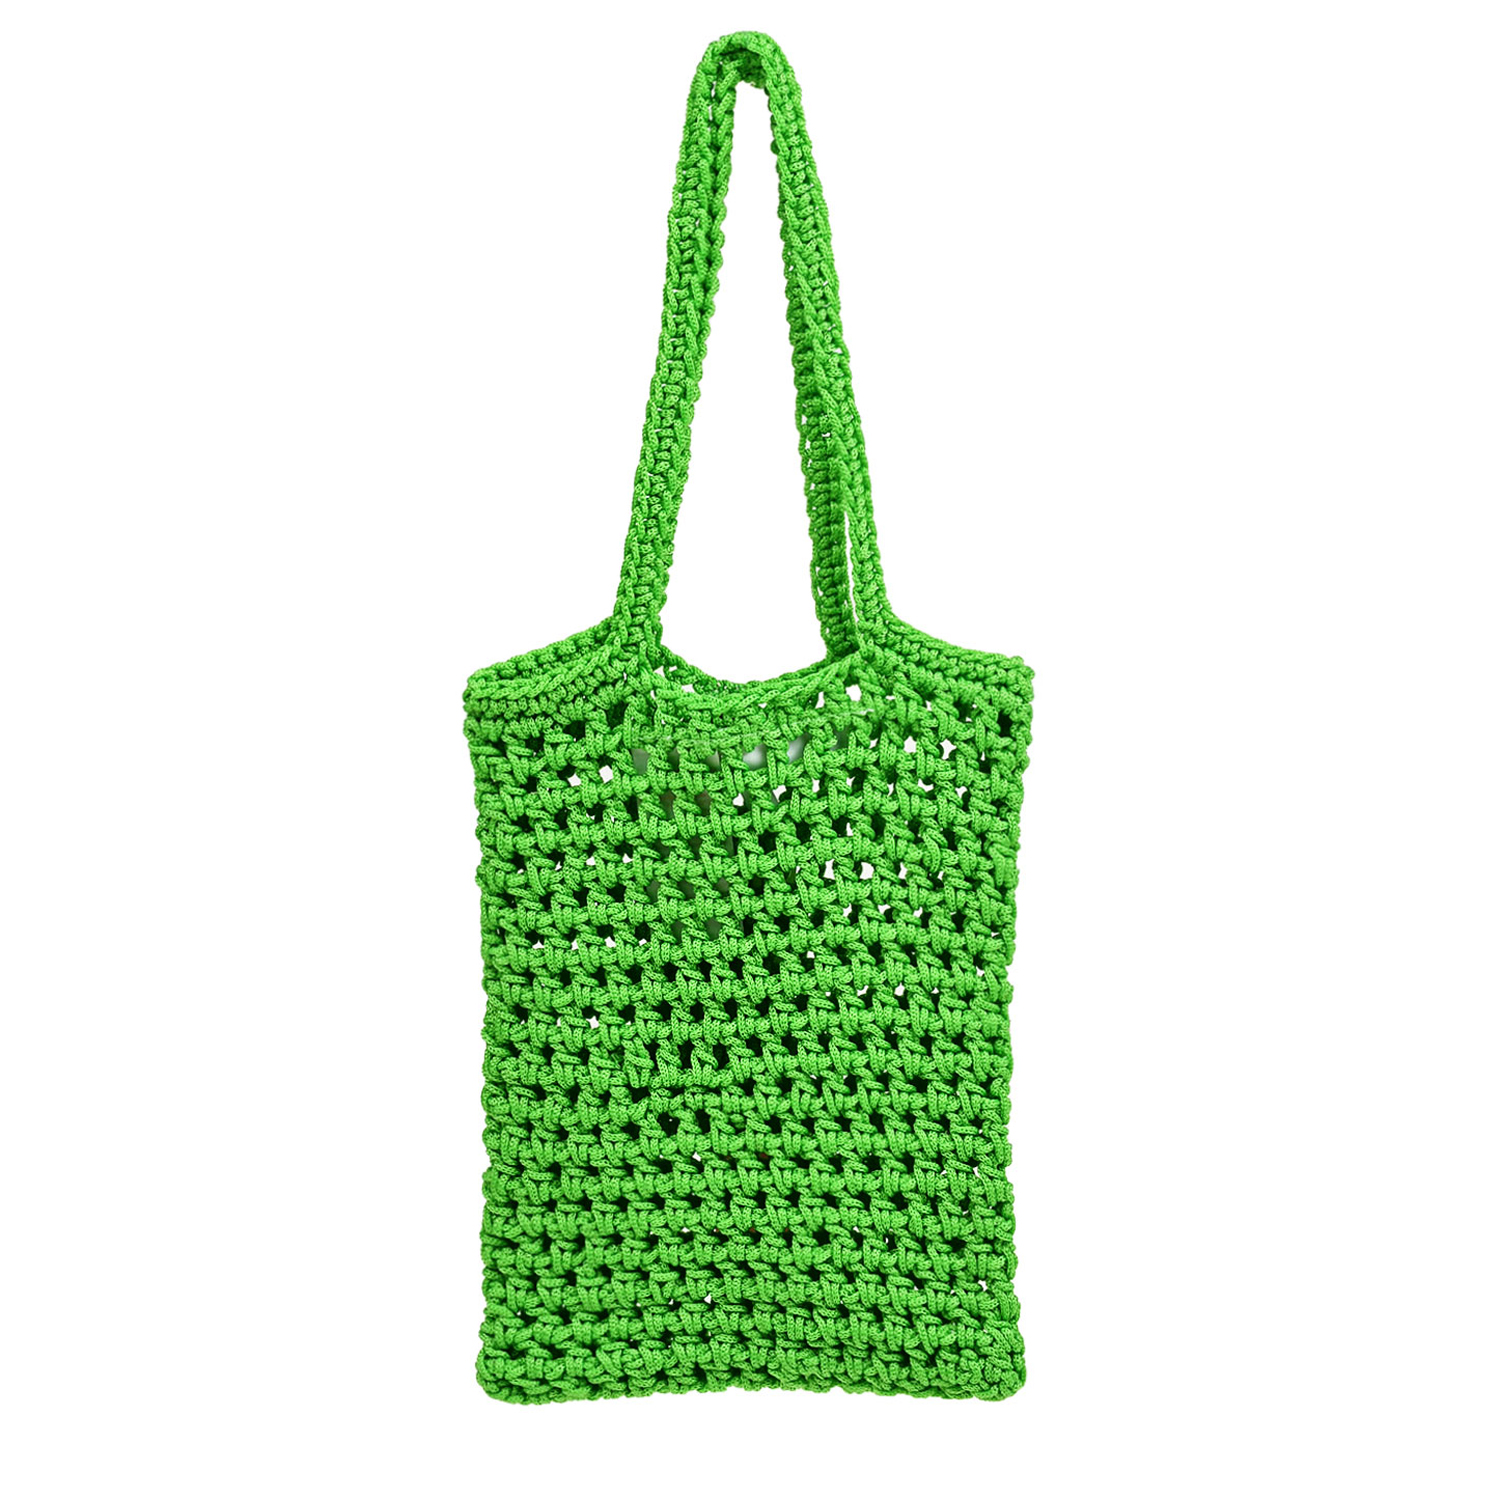 Сумка Crochet Bag Classic Green Molo, размер unica, цвет зеленый